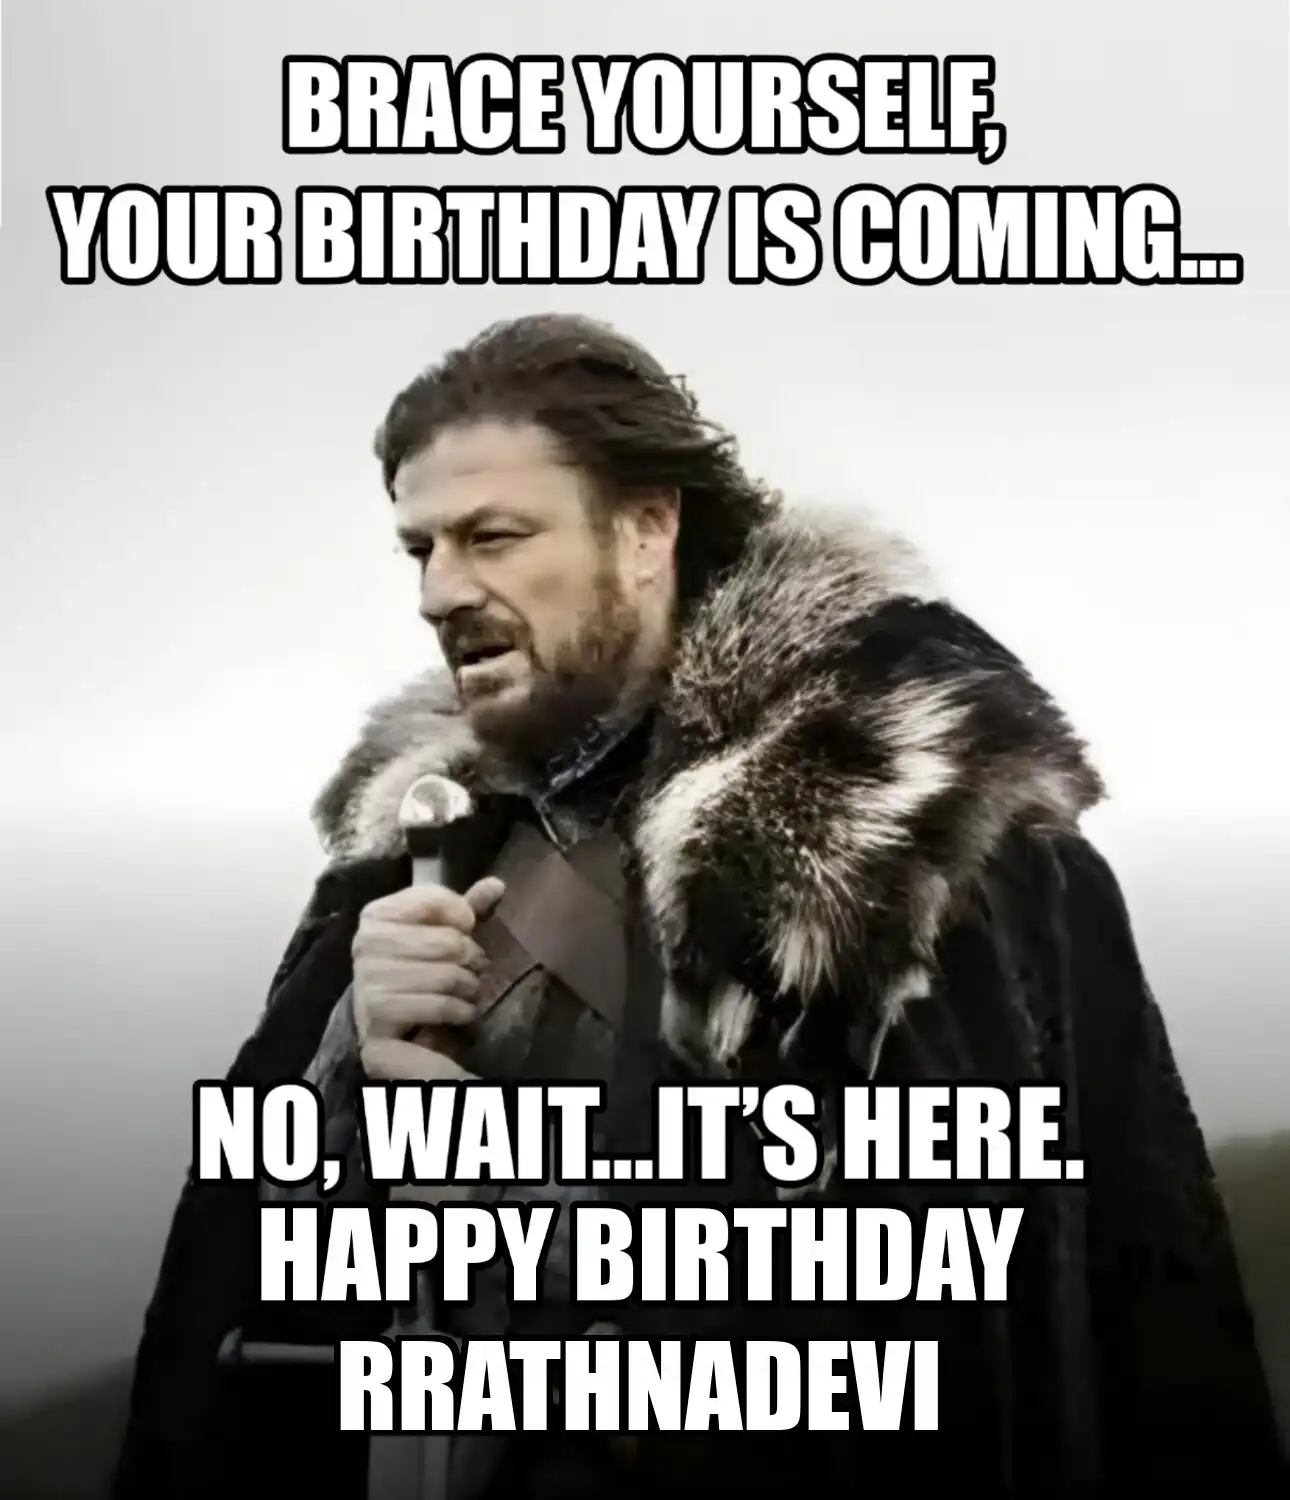 Happy Birthday Rrathnadevi Brace Yourself Your Birthday Is Coming Meme